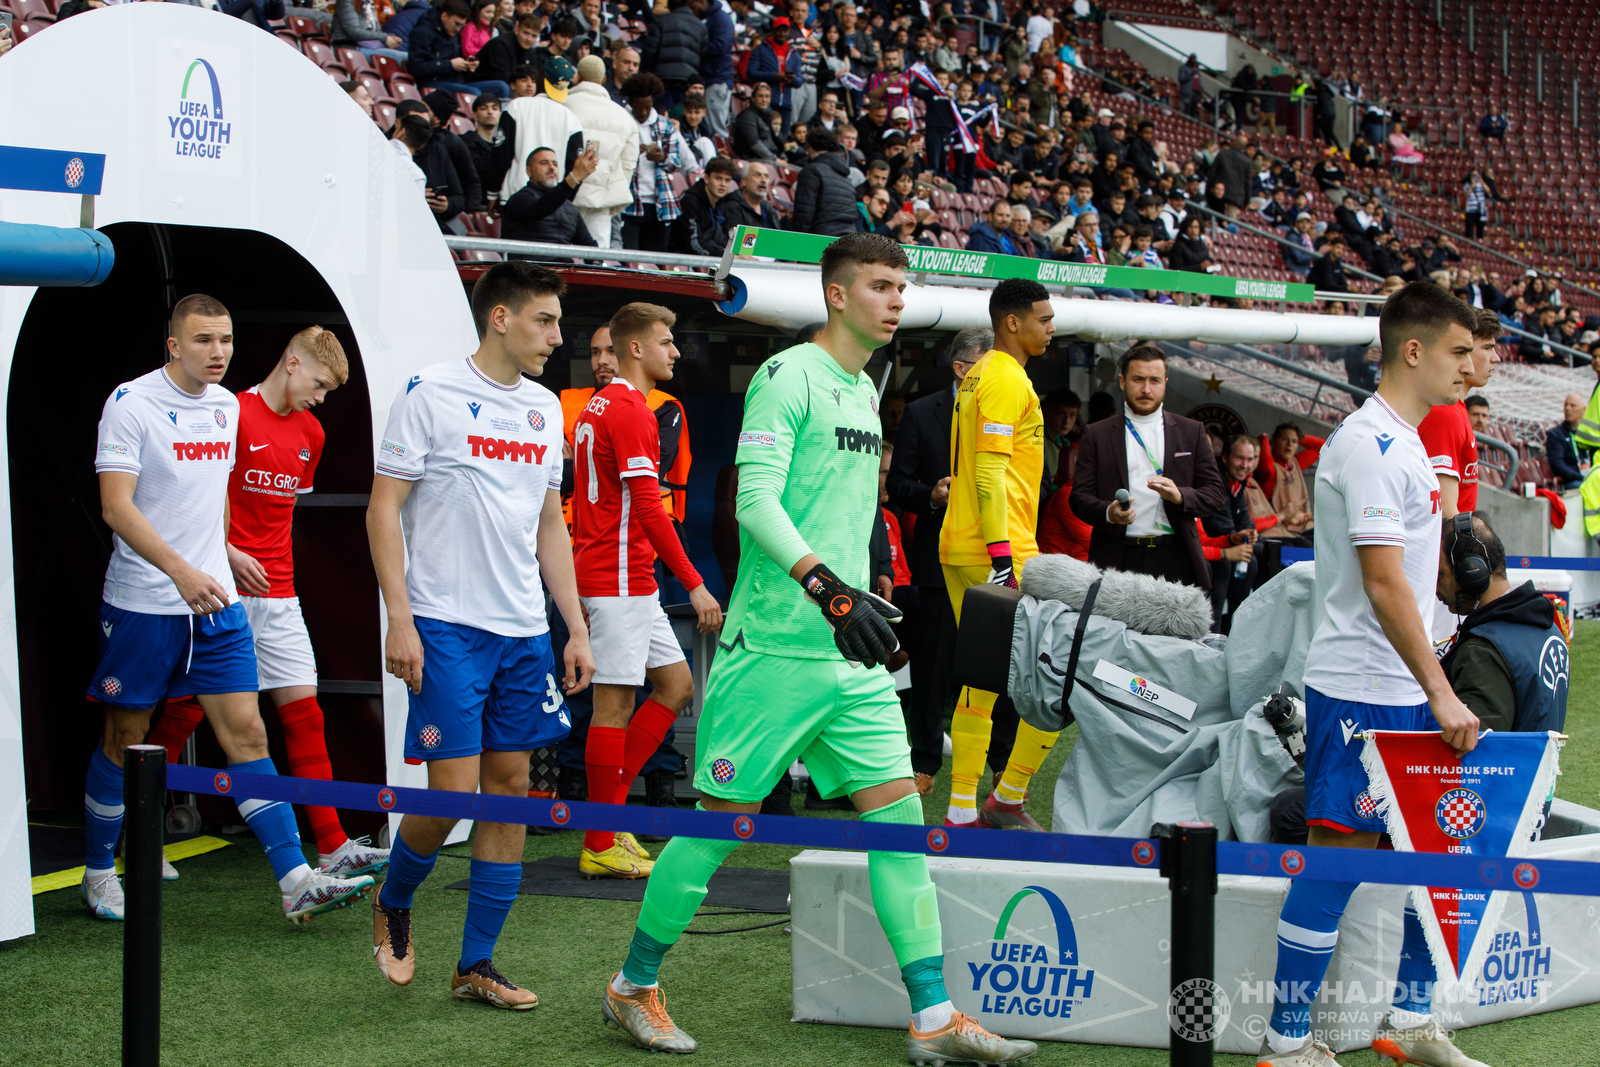 UEFA Youth League final highlights, report: AZ Alkmaar 5-0 Hajduk Split, UEFA Youth League